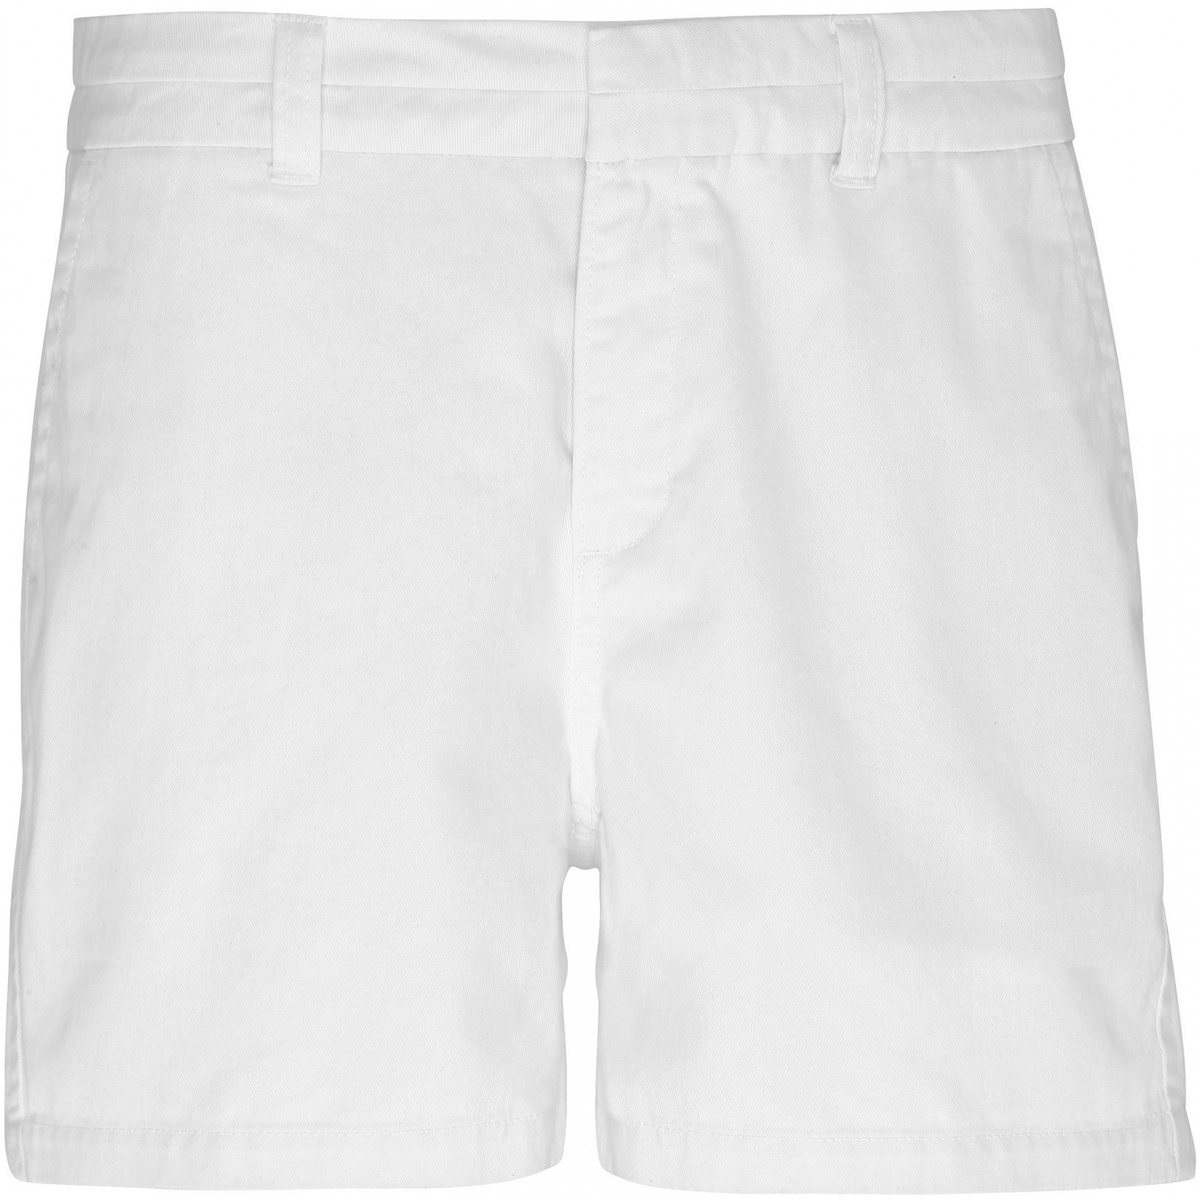 textil Mujer Shorts / Bermudas Asquith & Fox AQ061 Blanco